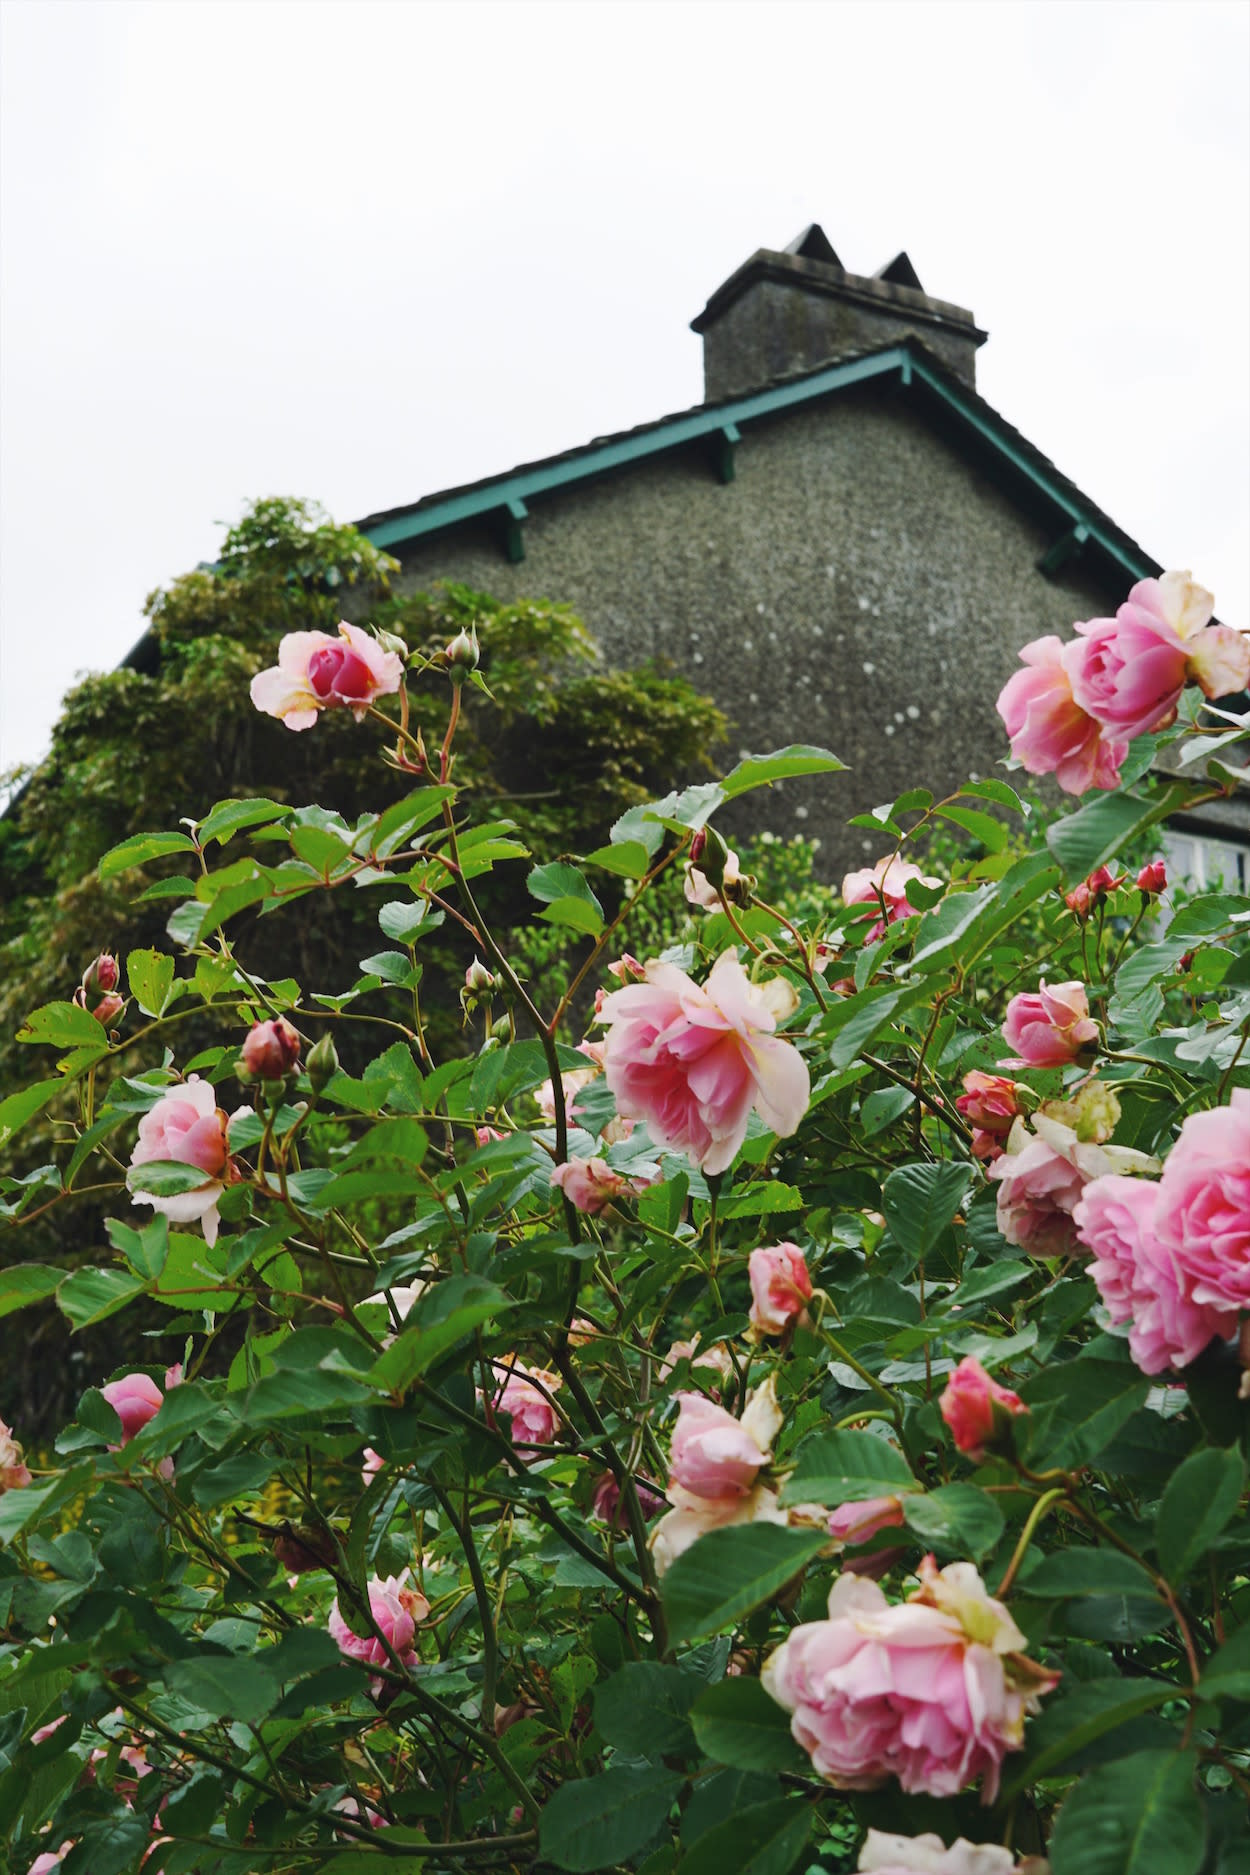 Northern English roses at Hill Top